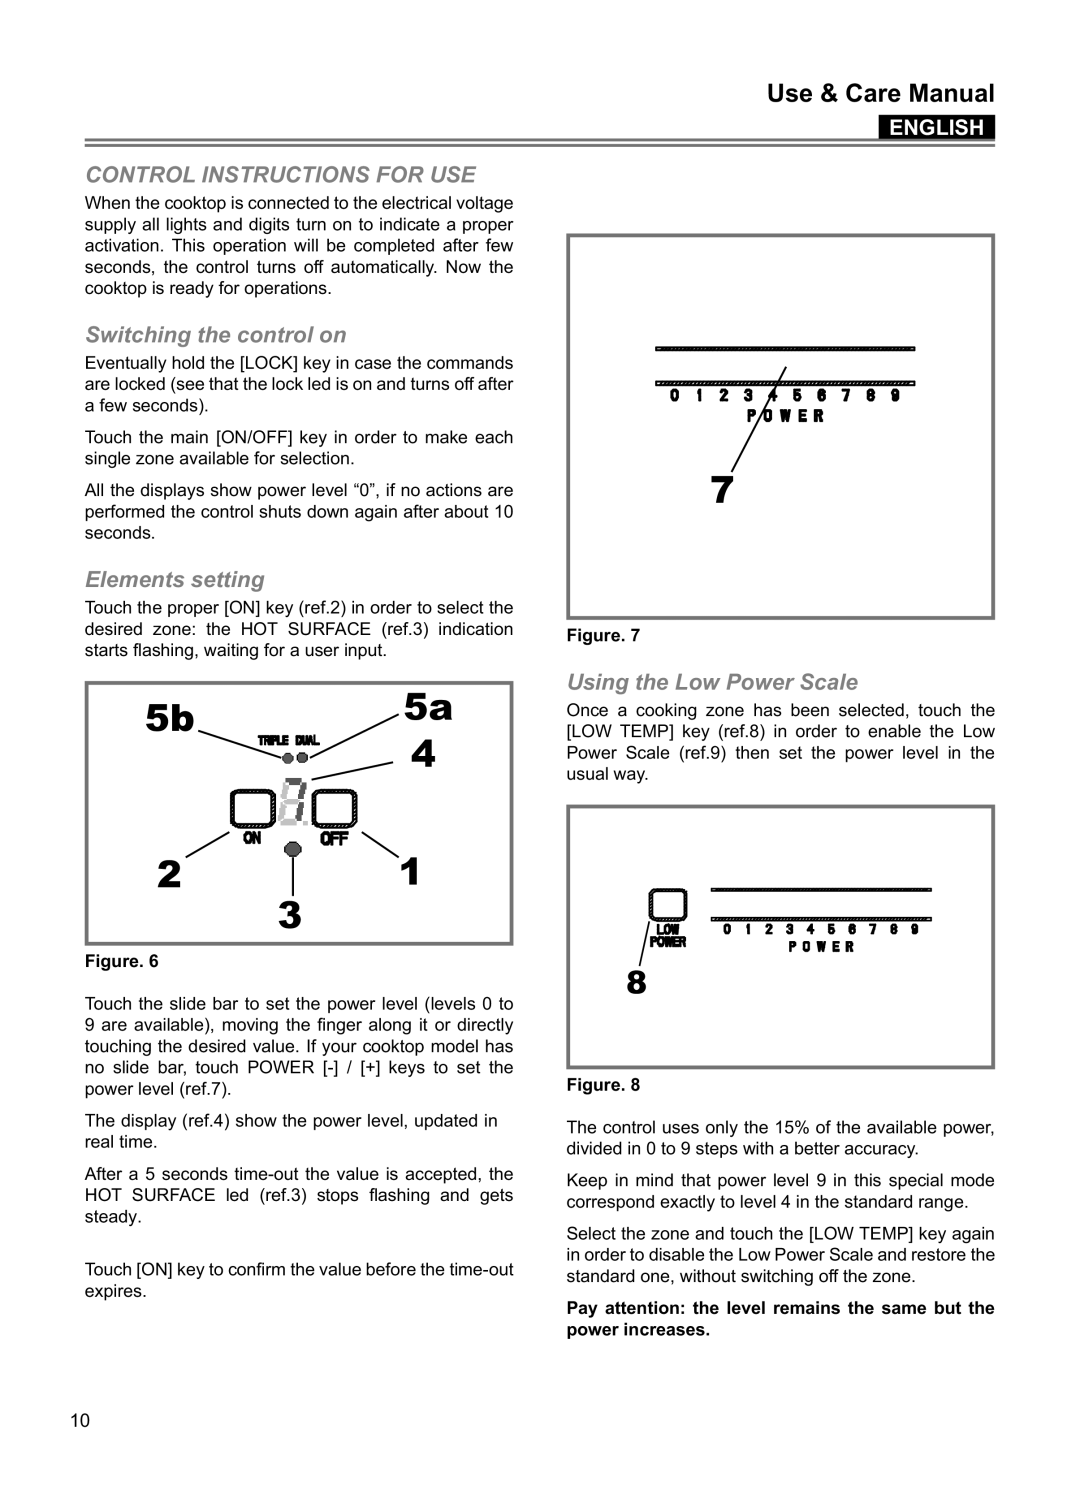 Blomberg CTE 36500, CTE 30400 manuel dutilisation Use & Care Manual, English, Figure 